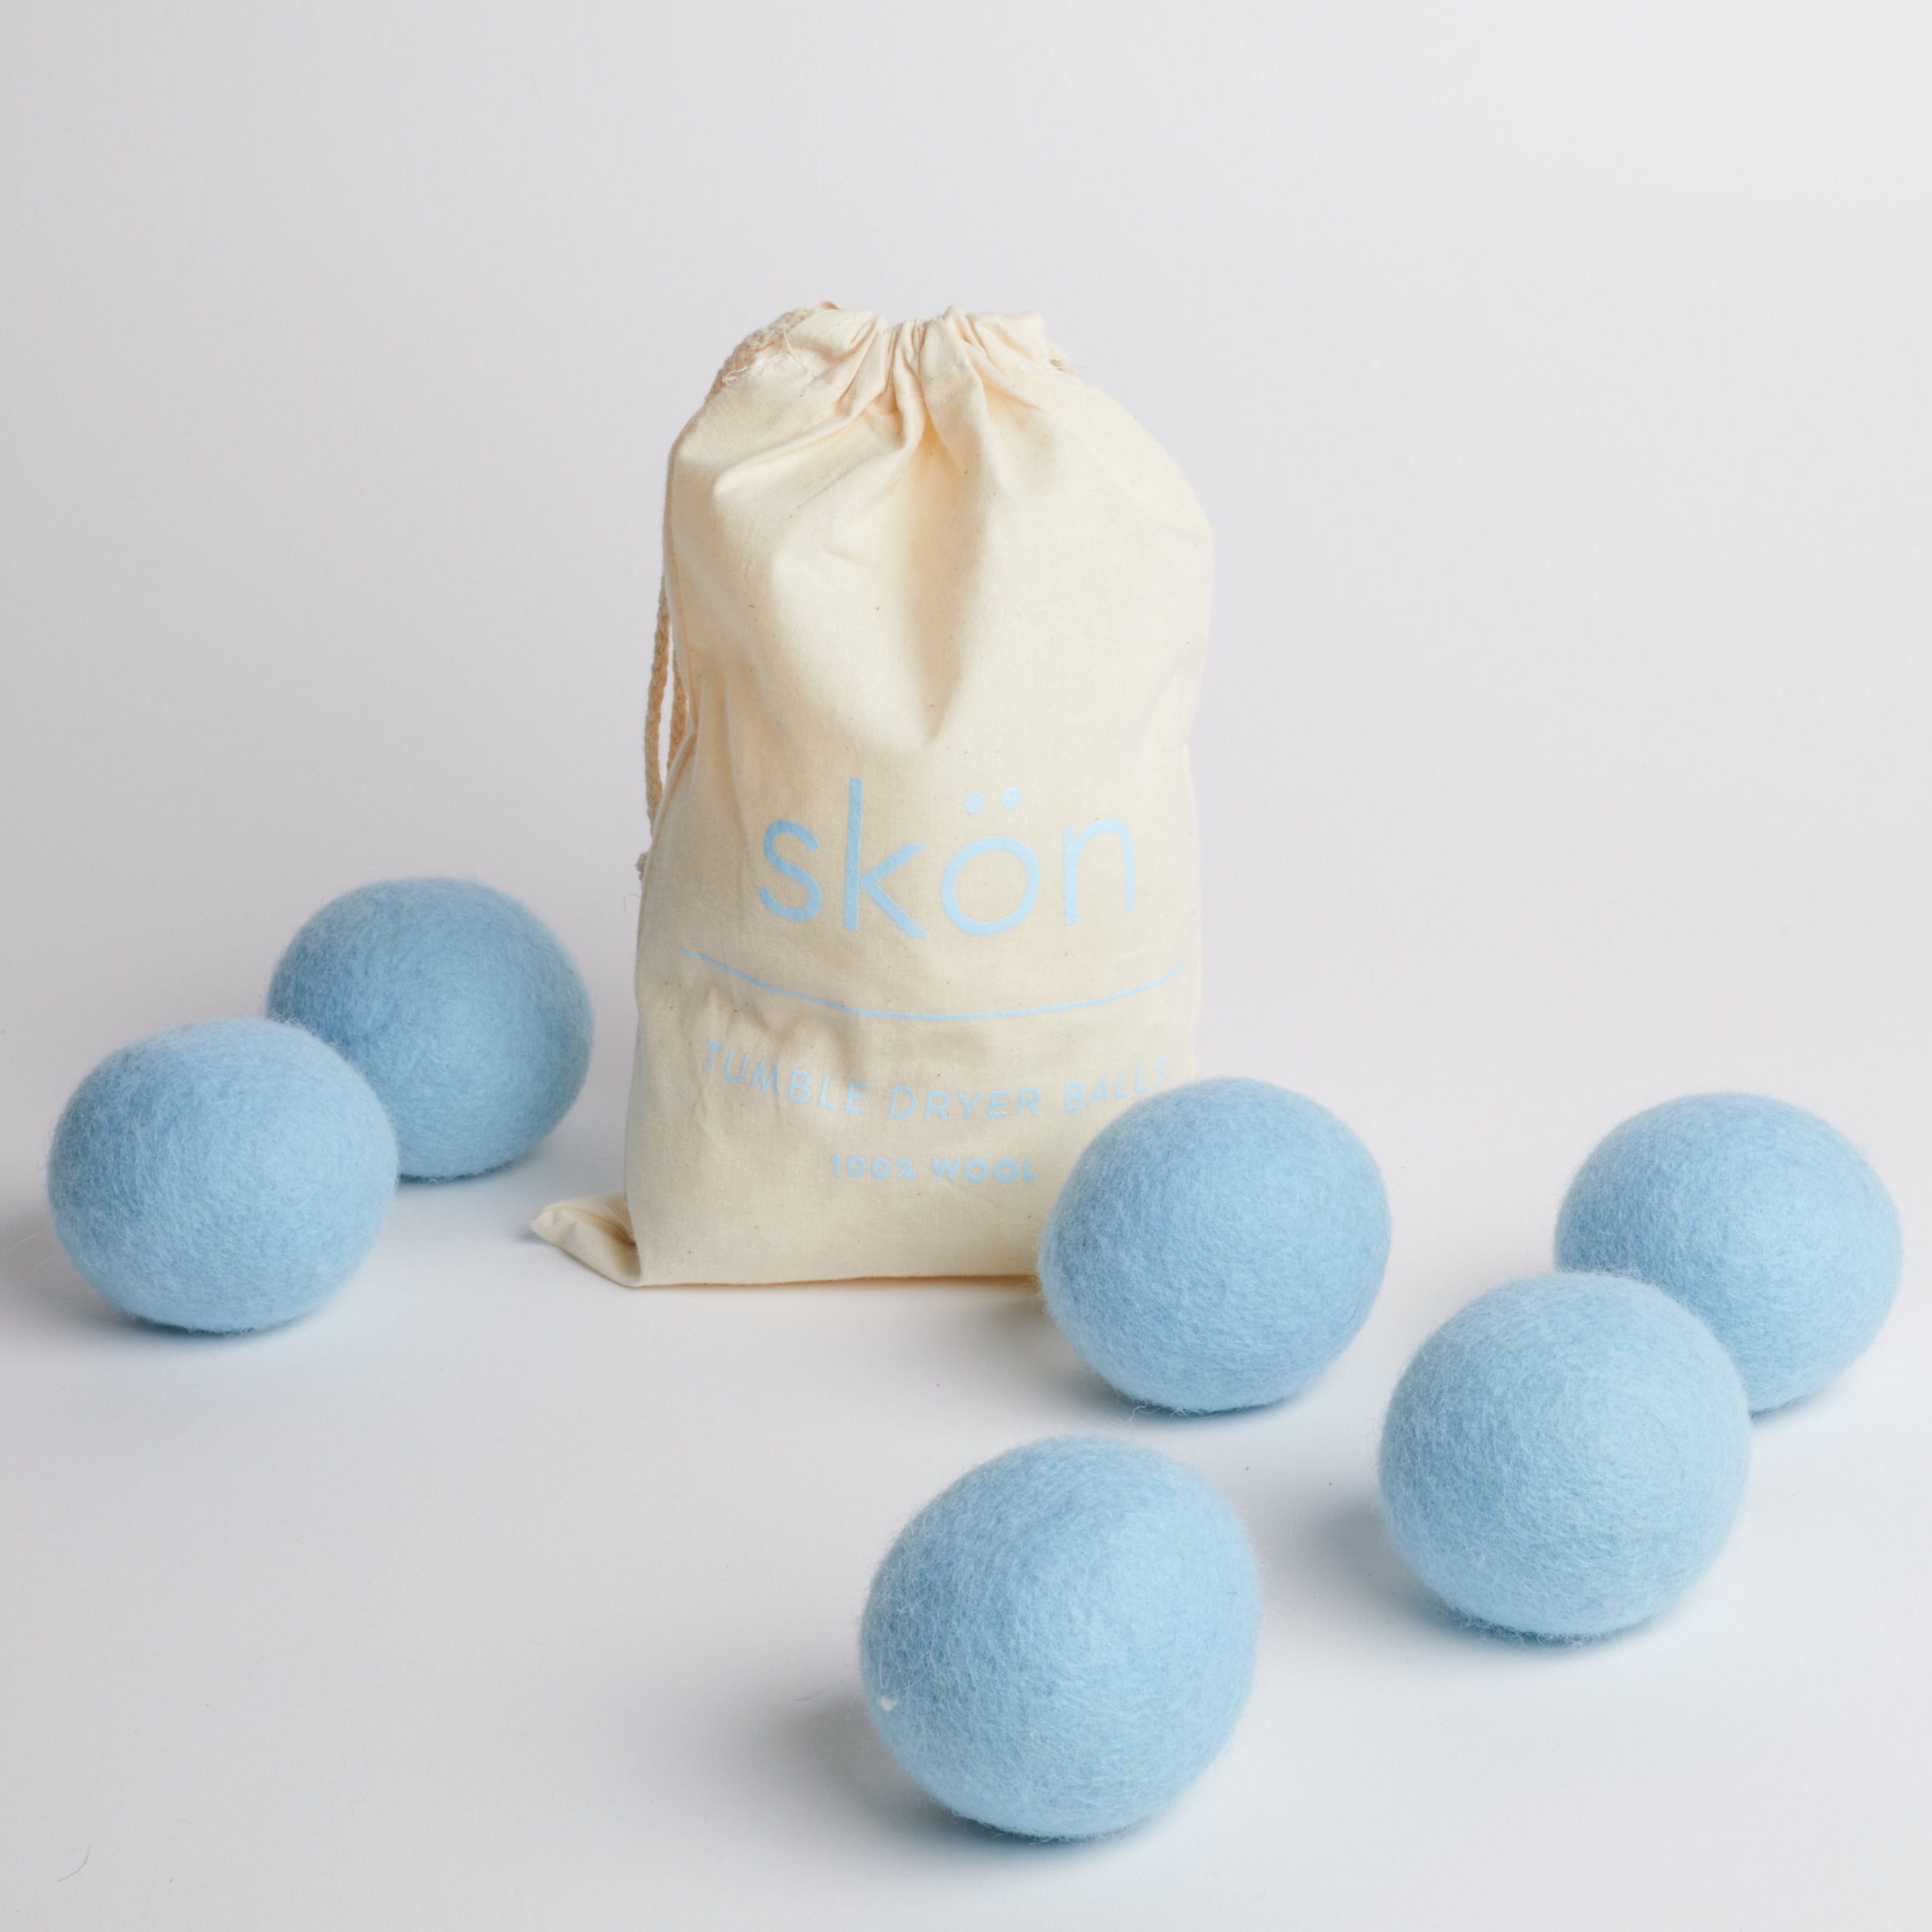 Wool Dryer Balls - Pack of 6